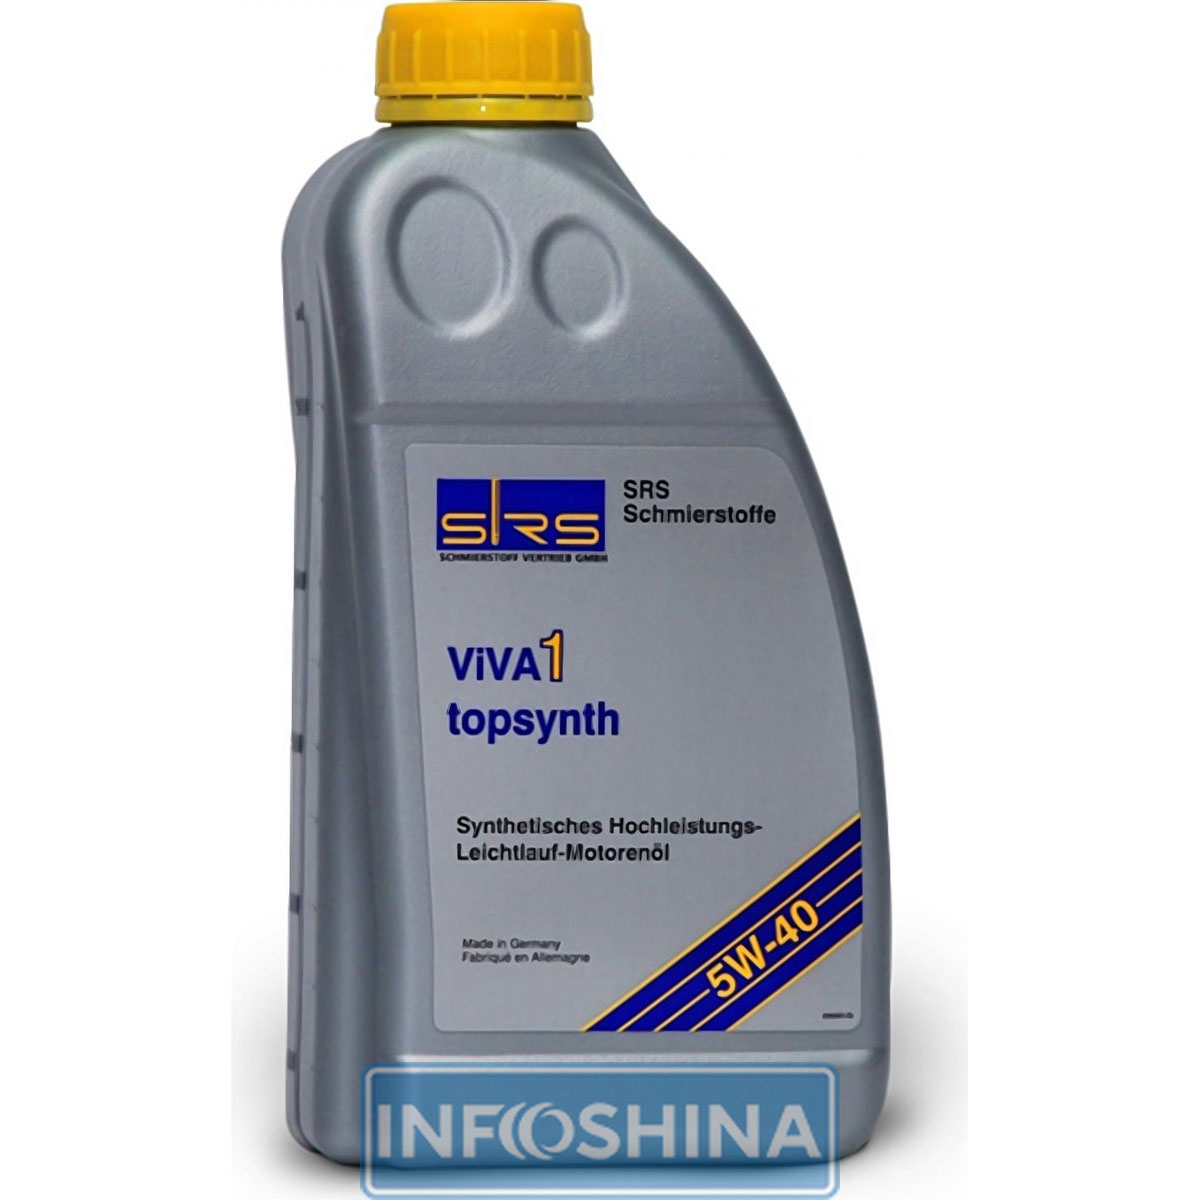 Купить масло SRS ViVA 1 topsynth 5W-40 (1л)